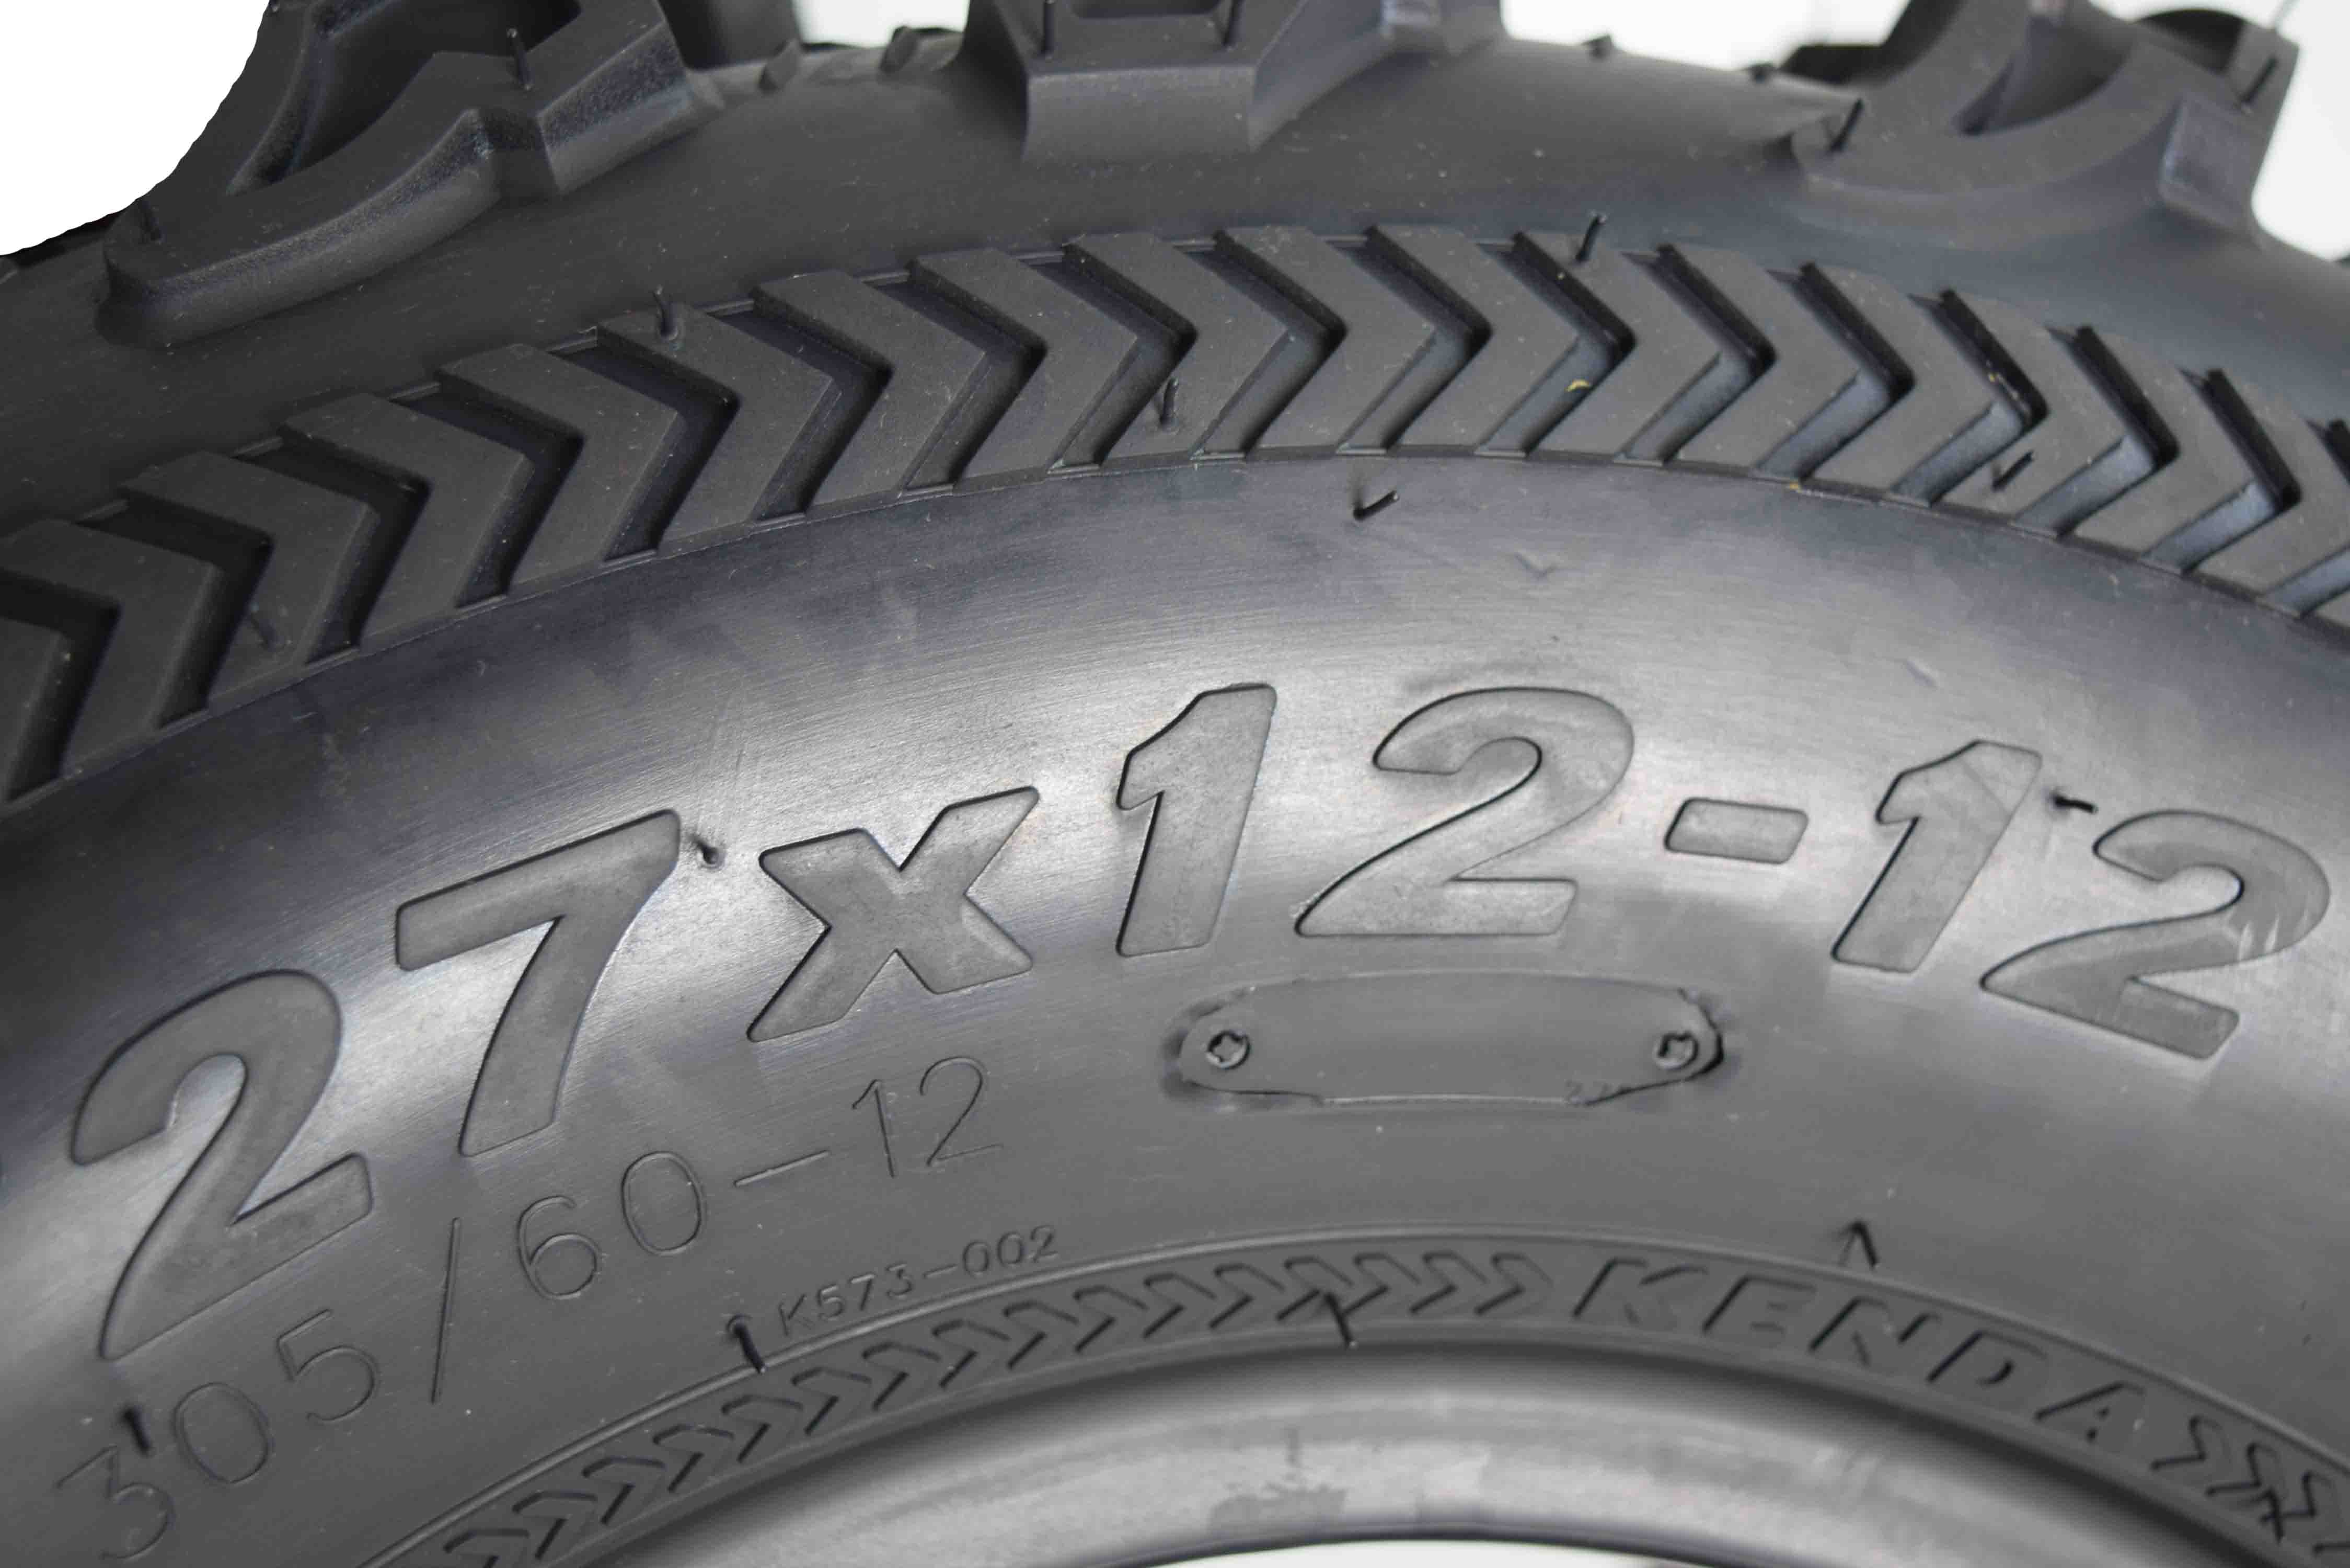 Kenda Bear Claw EX 27x12-12 Rear ATV 6 PLY Tires Bearclaw 27x12x12 - 4 Pack